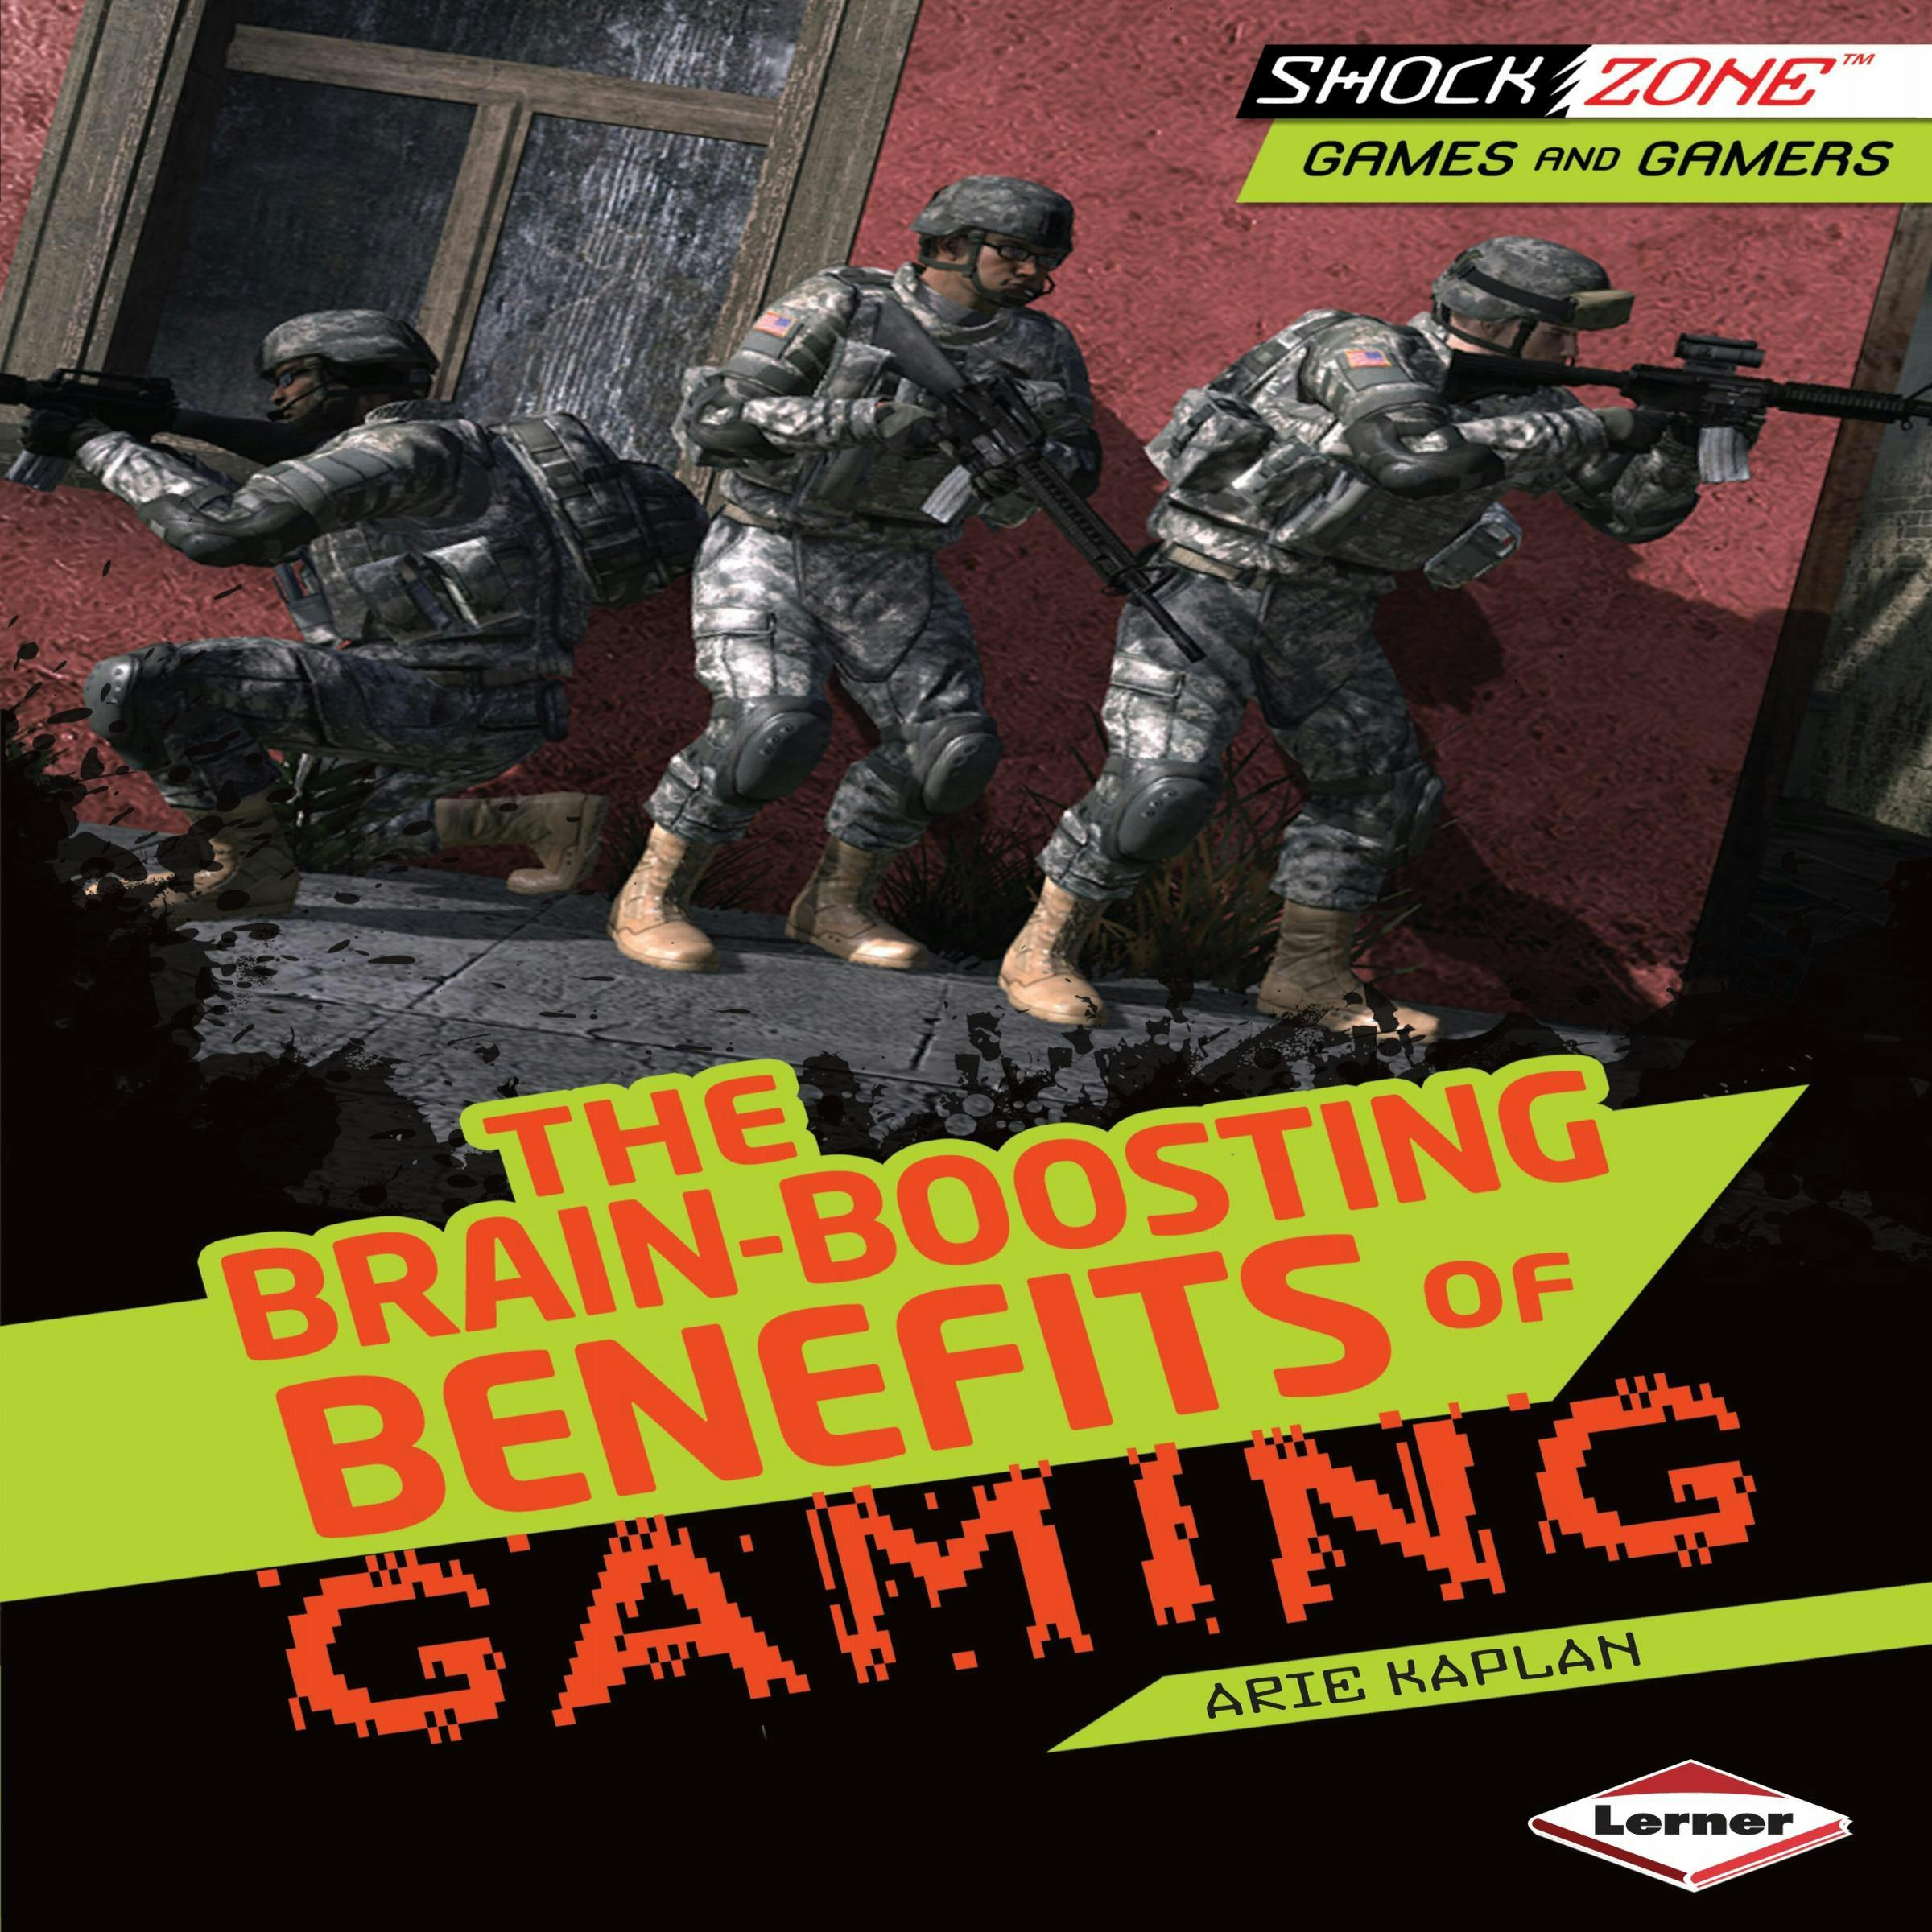 The Brain-Boosting Benefits of Gaming - Arie Kaplan